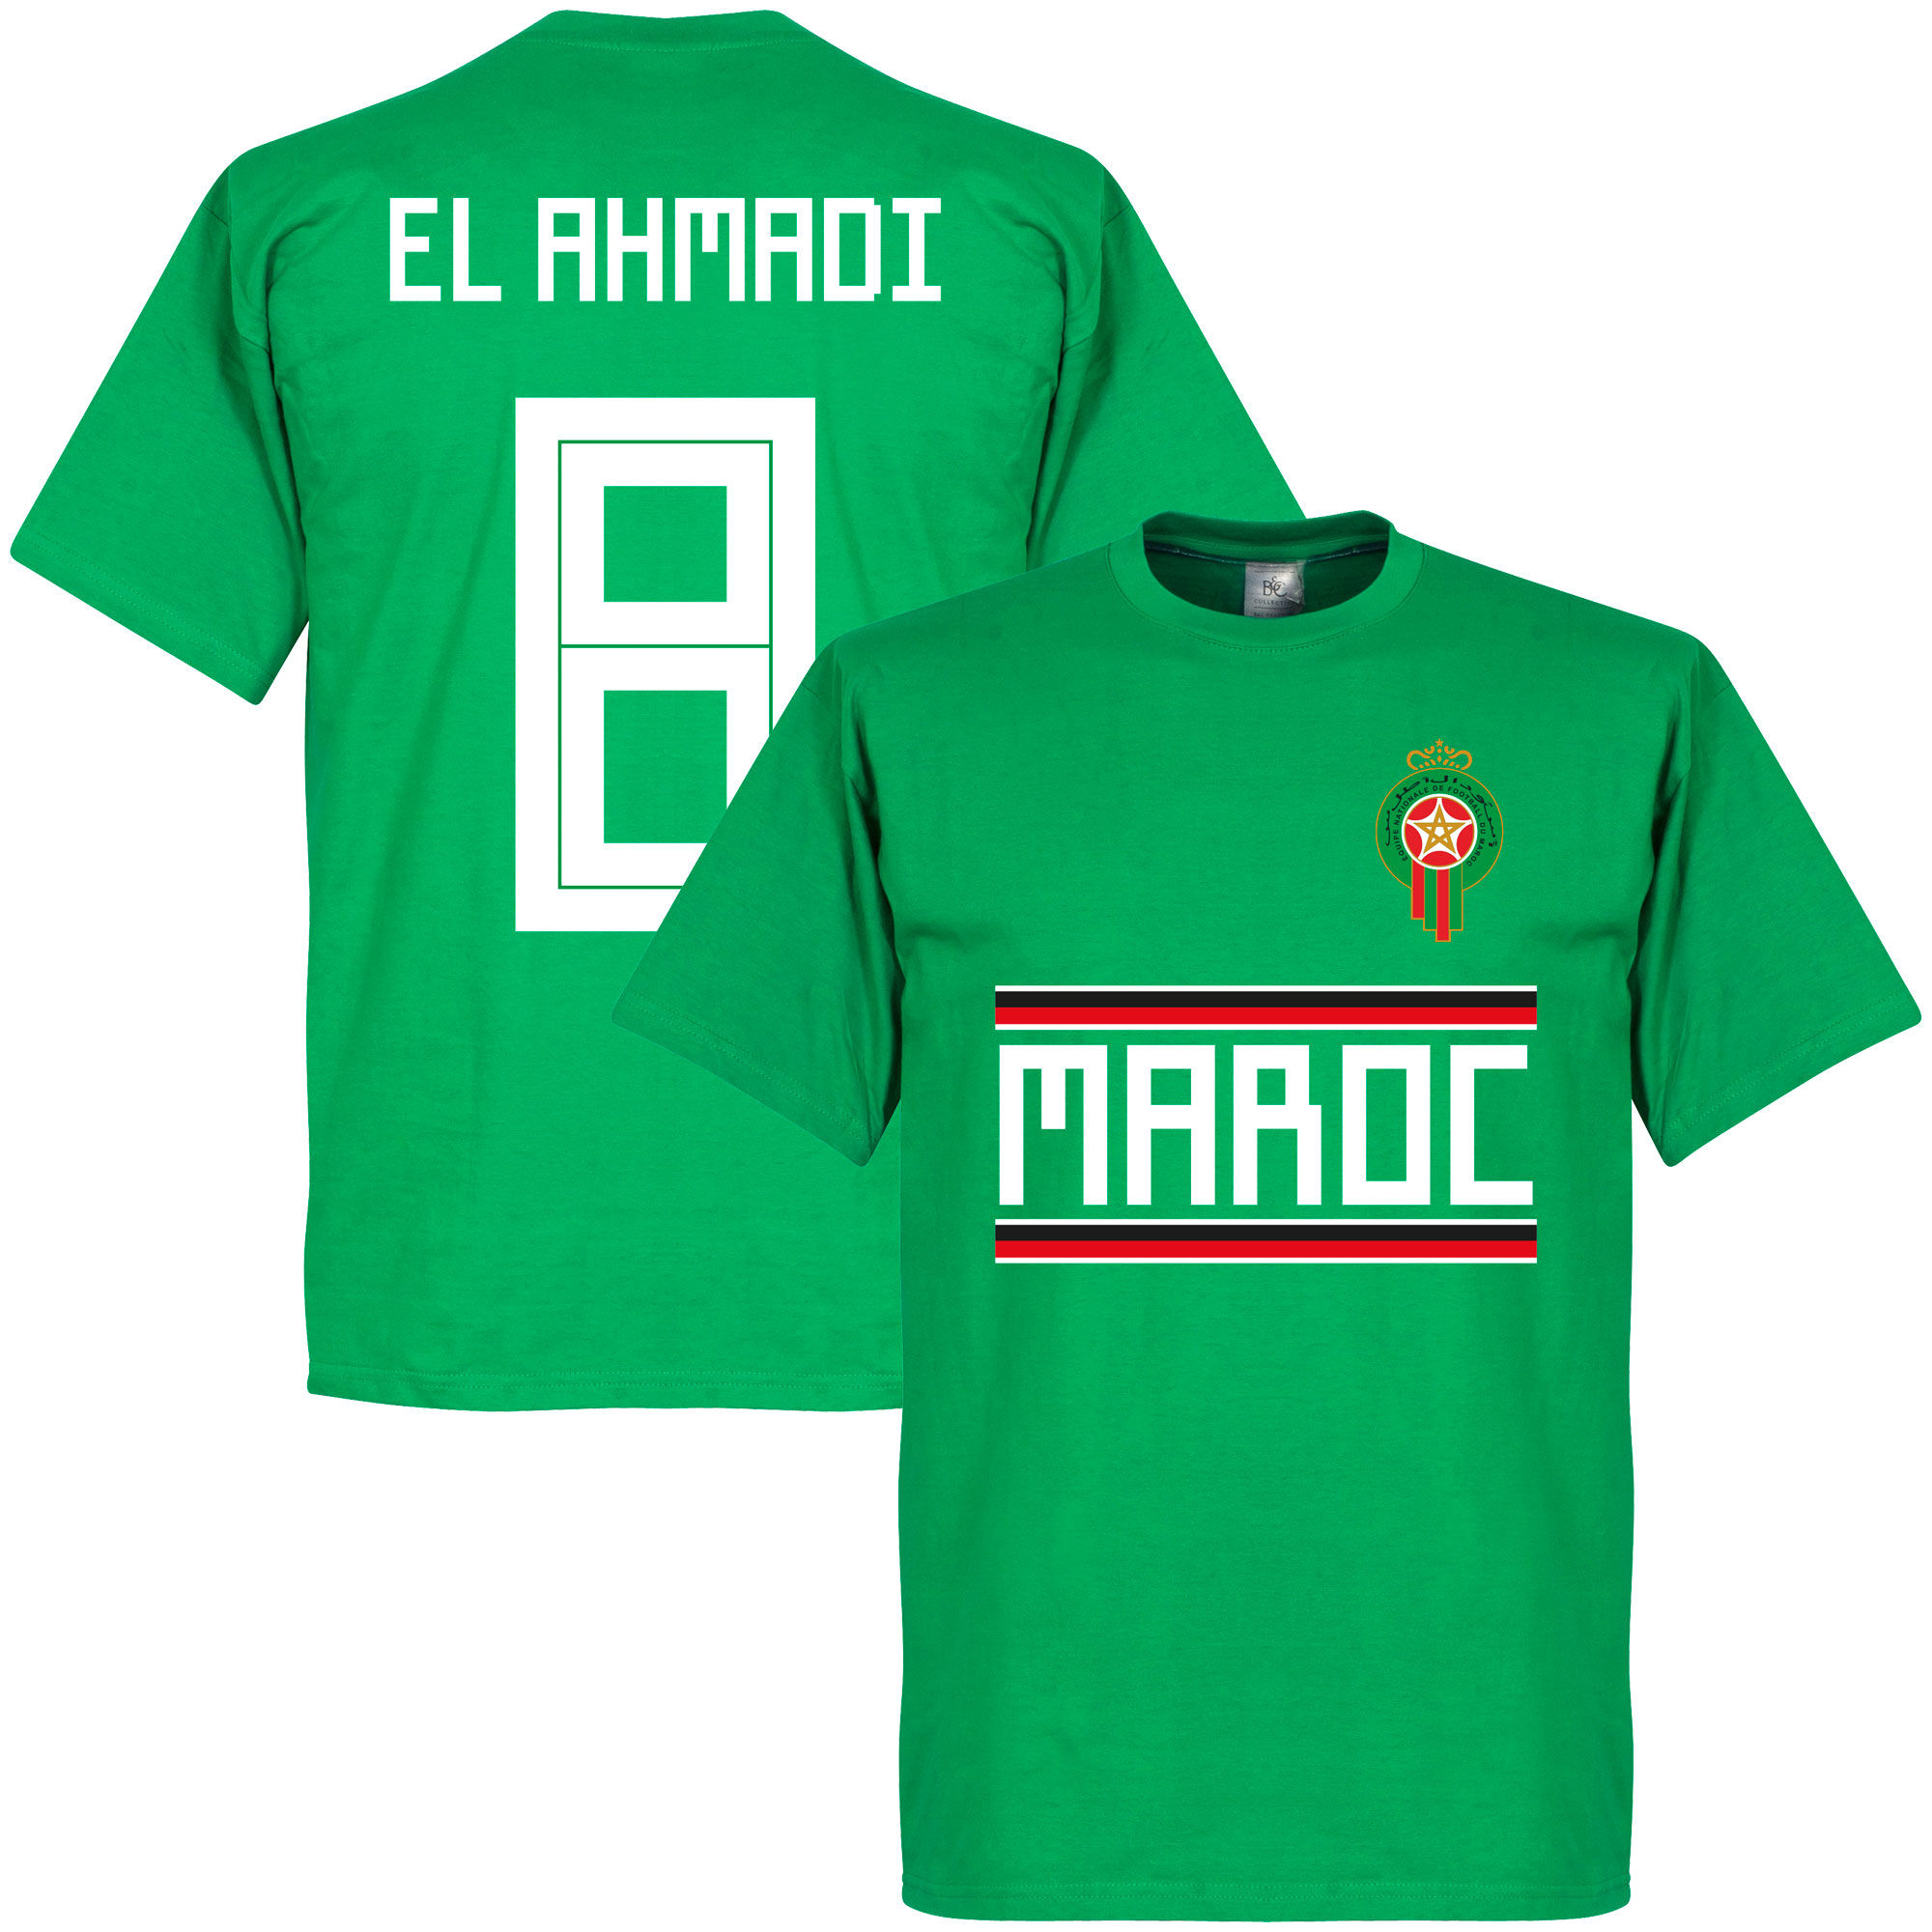 Maroko - Tričko - zelené, Karim El Ahmadi, číslo 8